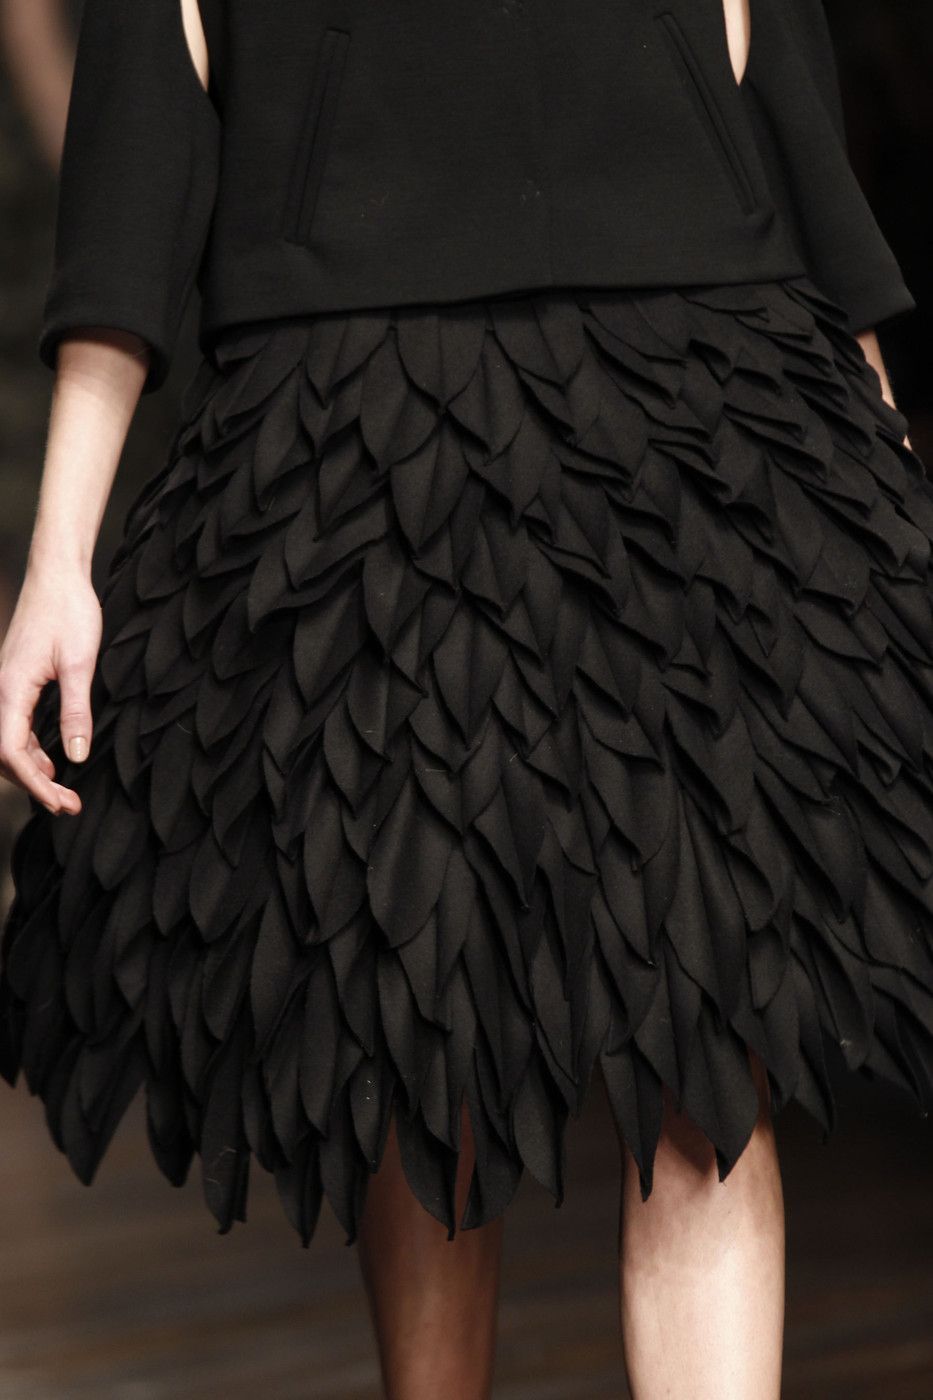 Wool Leaves – layered leaf texture skirt; fabric manipulation for fashion // John Rocha